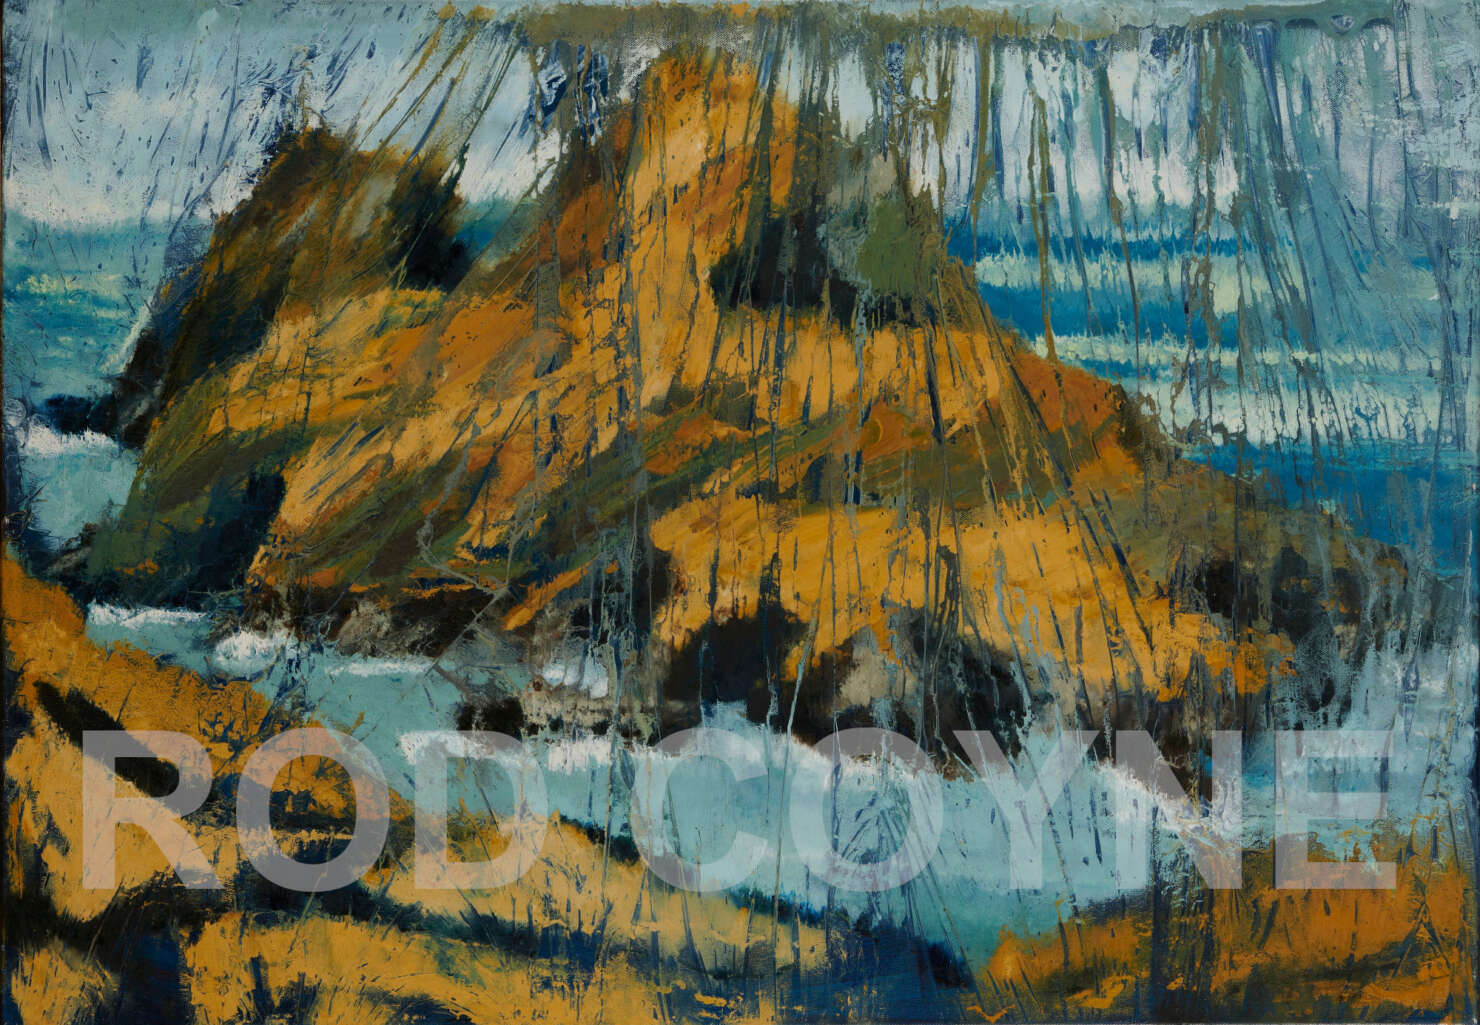 artist rod coyne's landscape "Approach Flight Puffin Island" is shown here, watermarked.